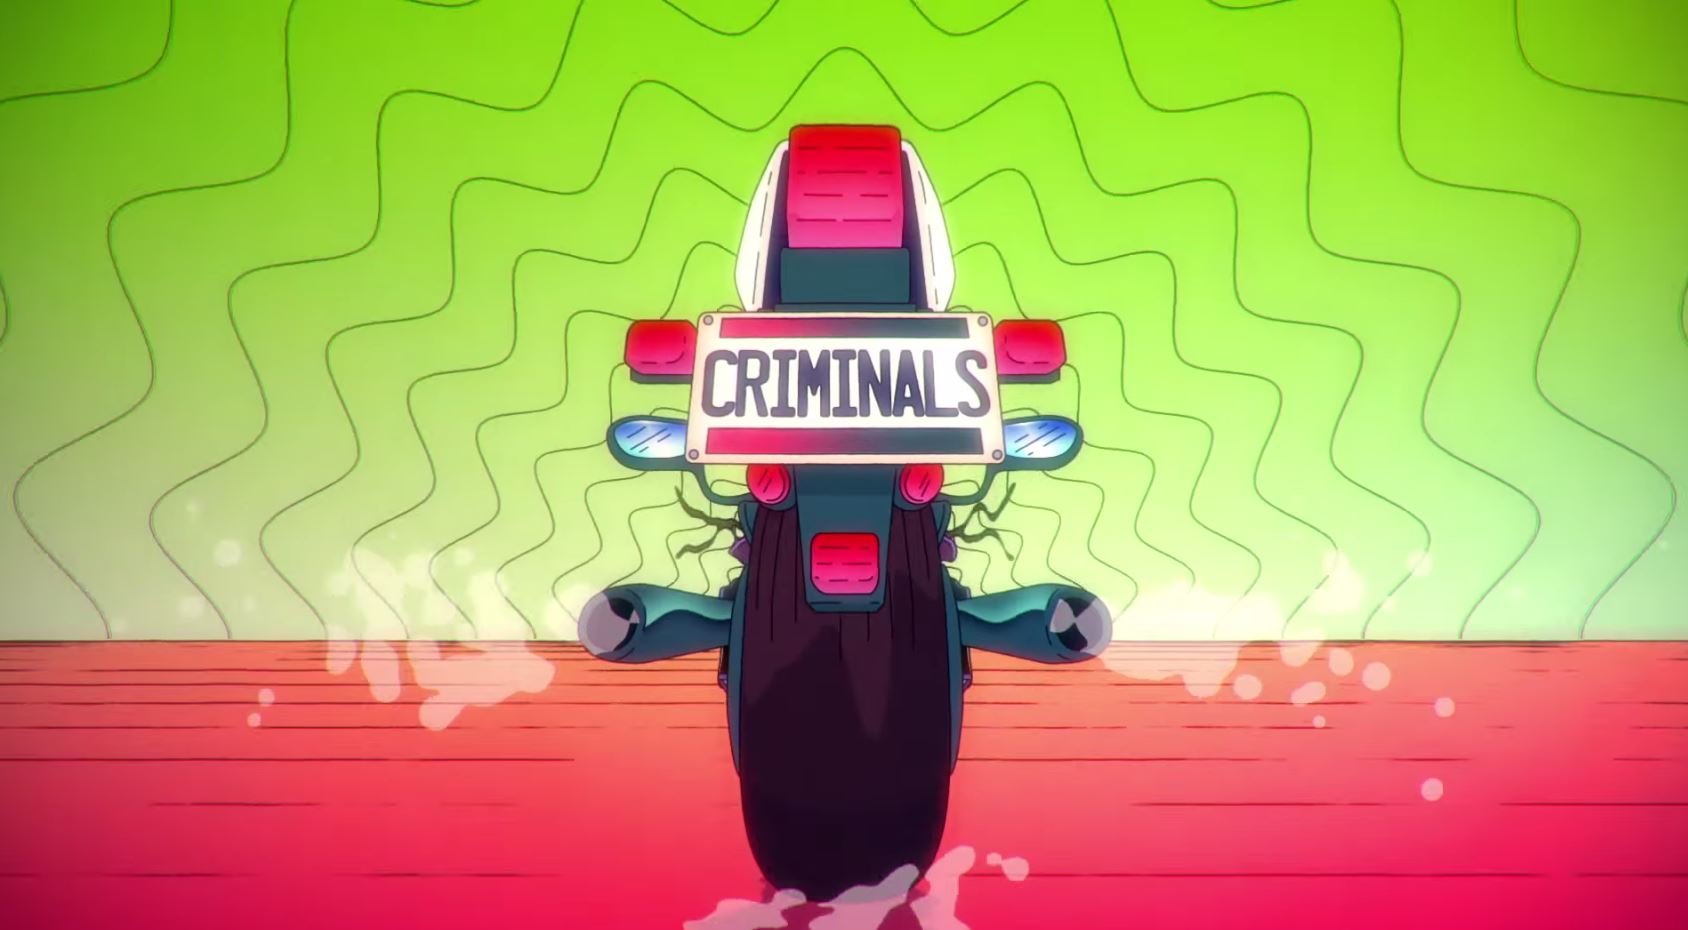 MSMR - Criminals via YouTube screen cap